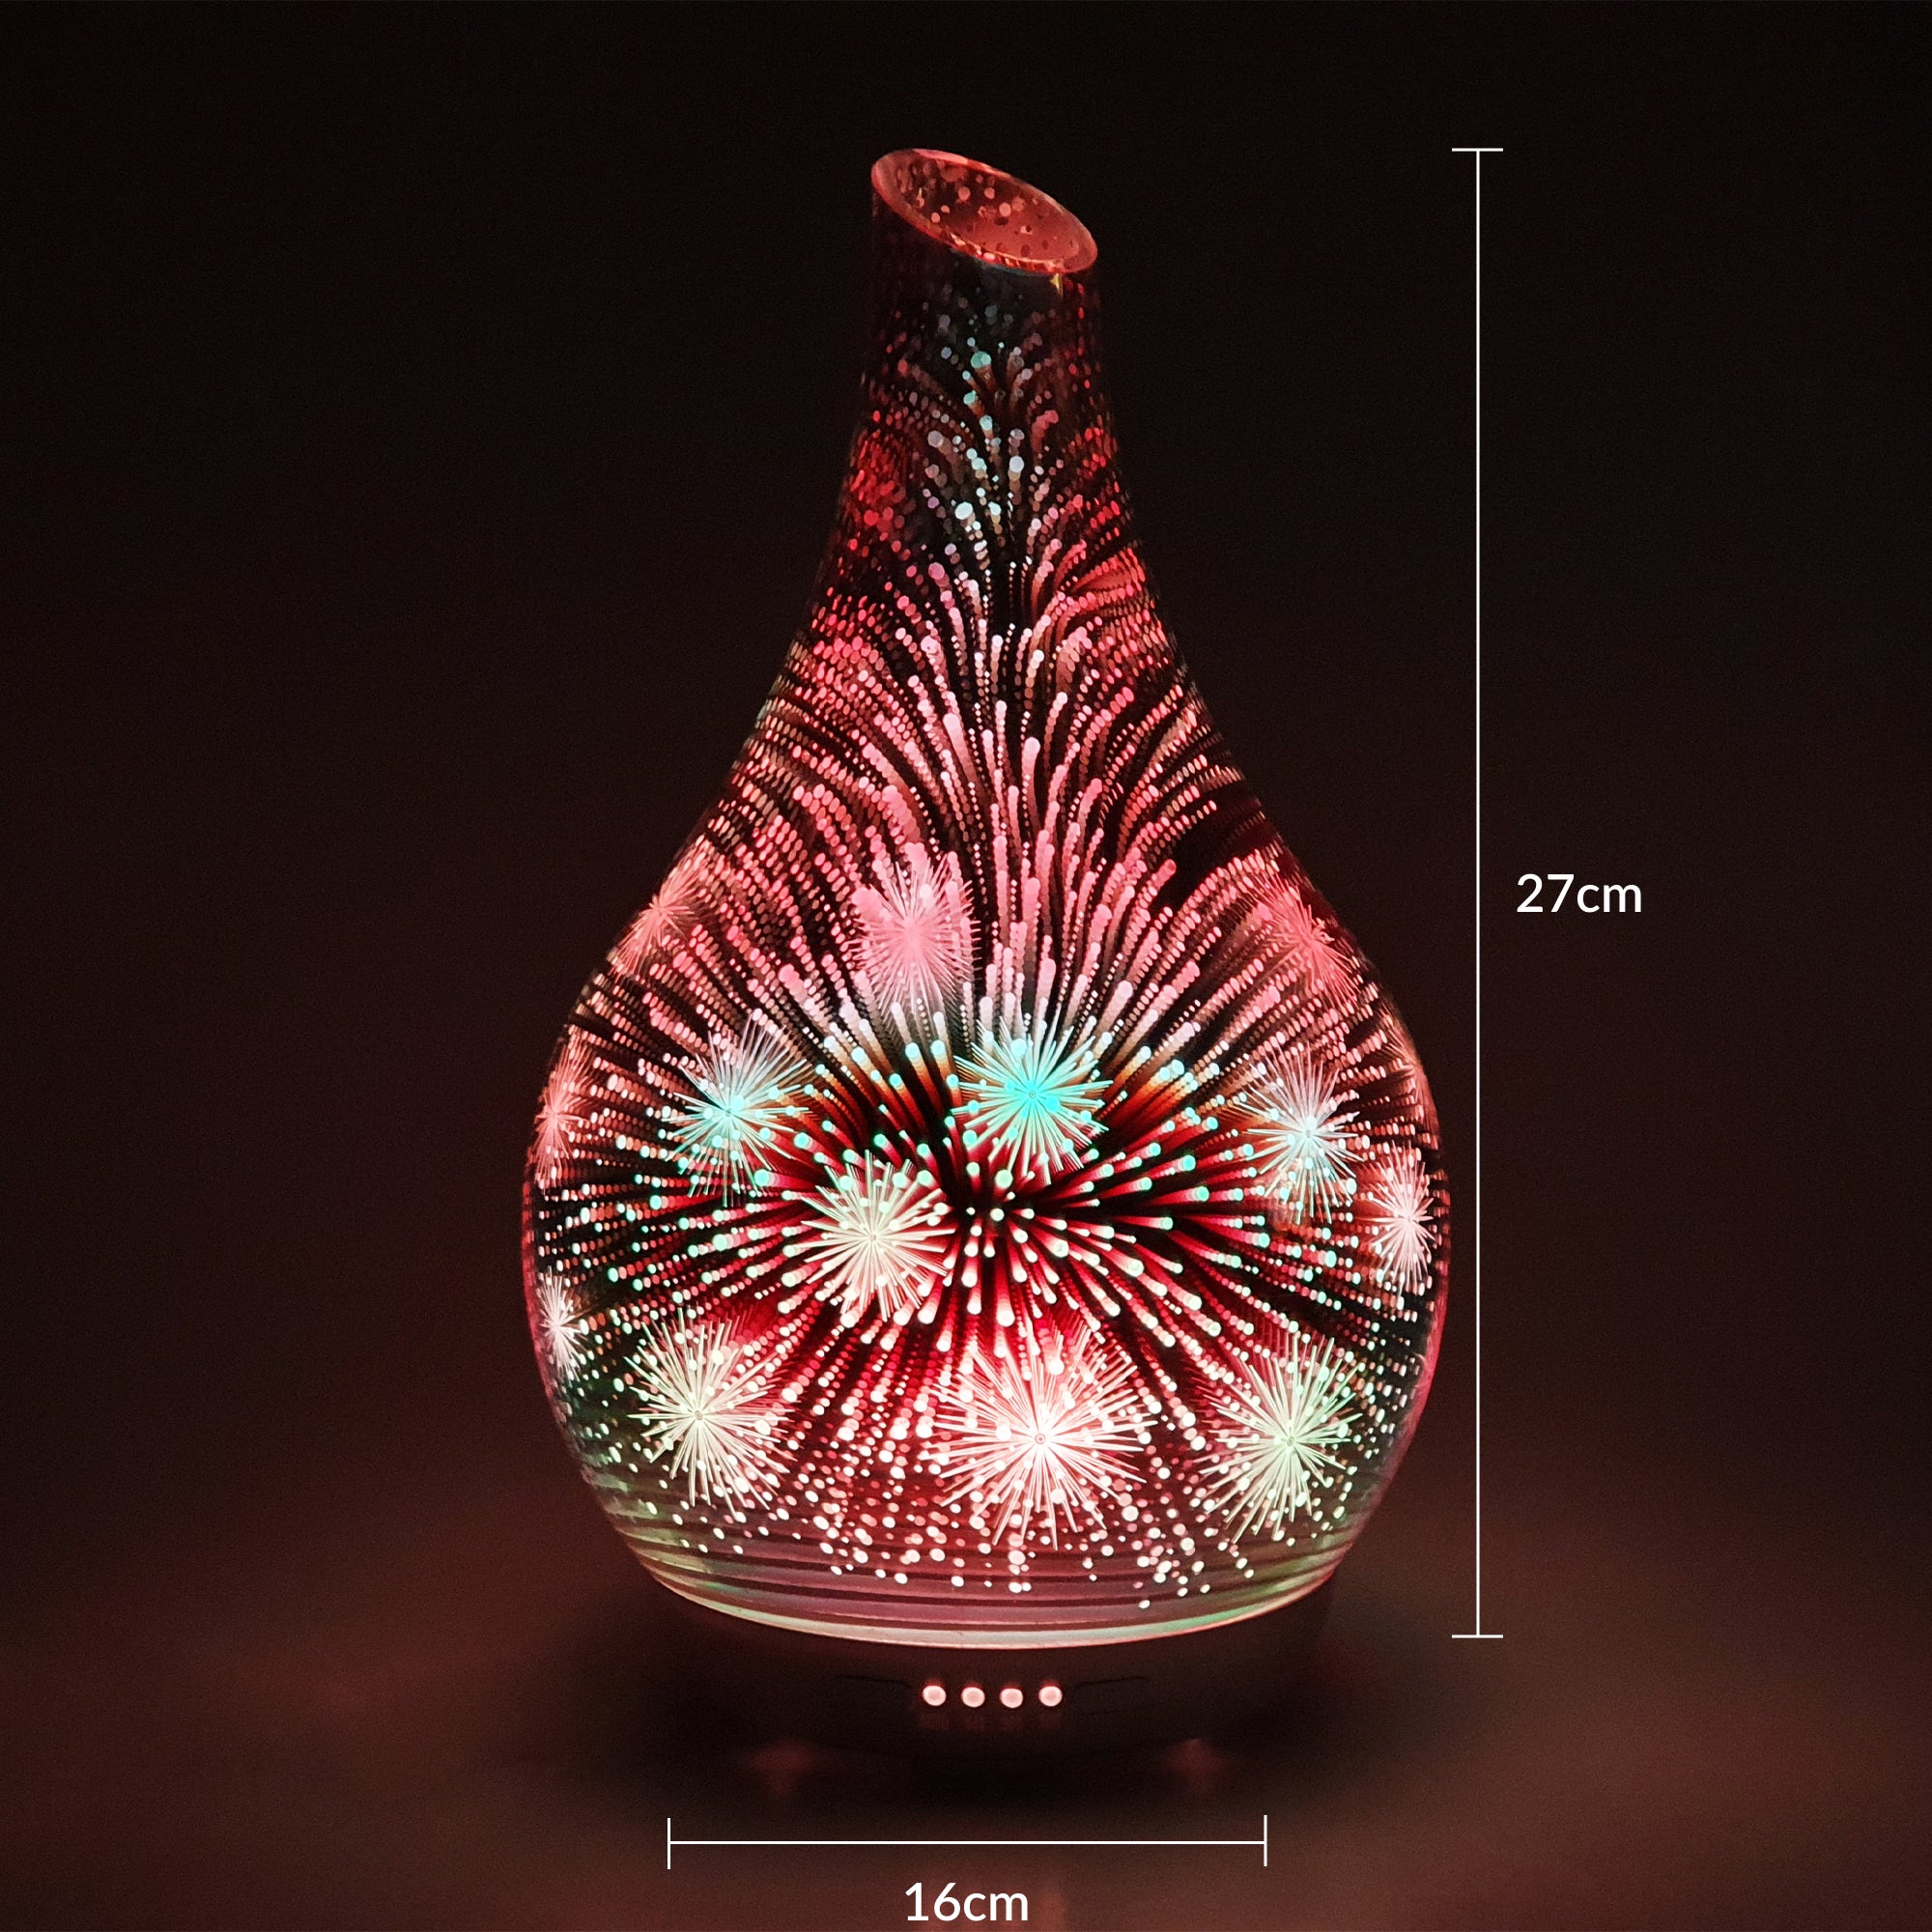 Ultrasonic Diffuser Art Glass - Firework 3D Large